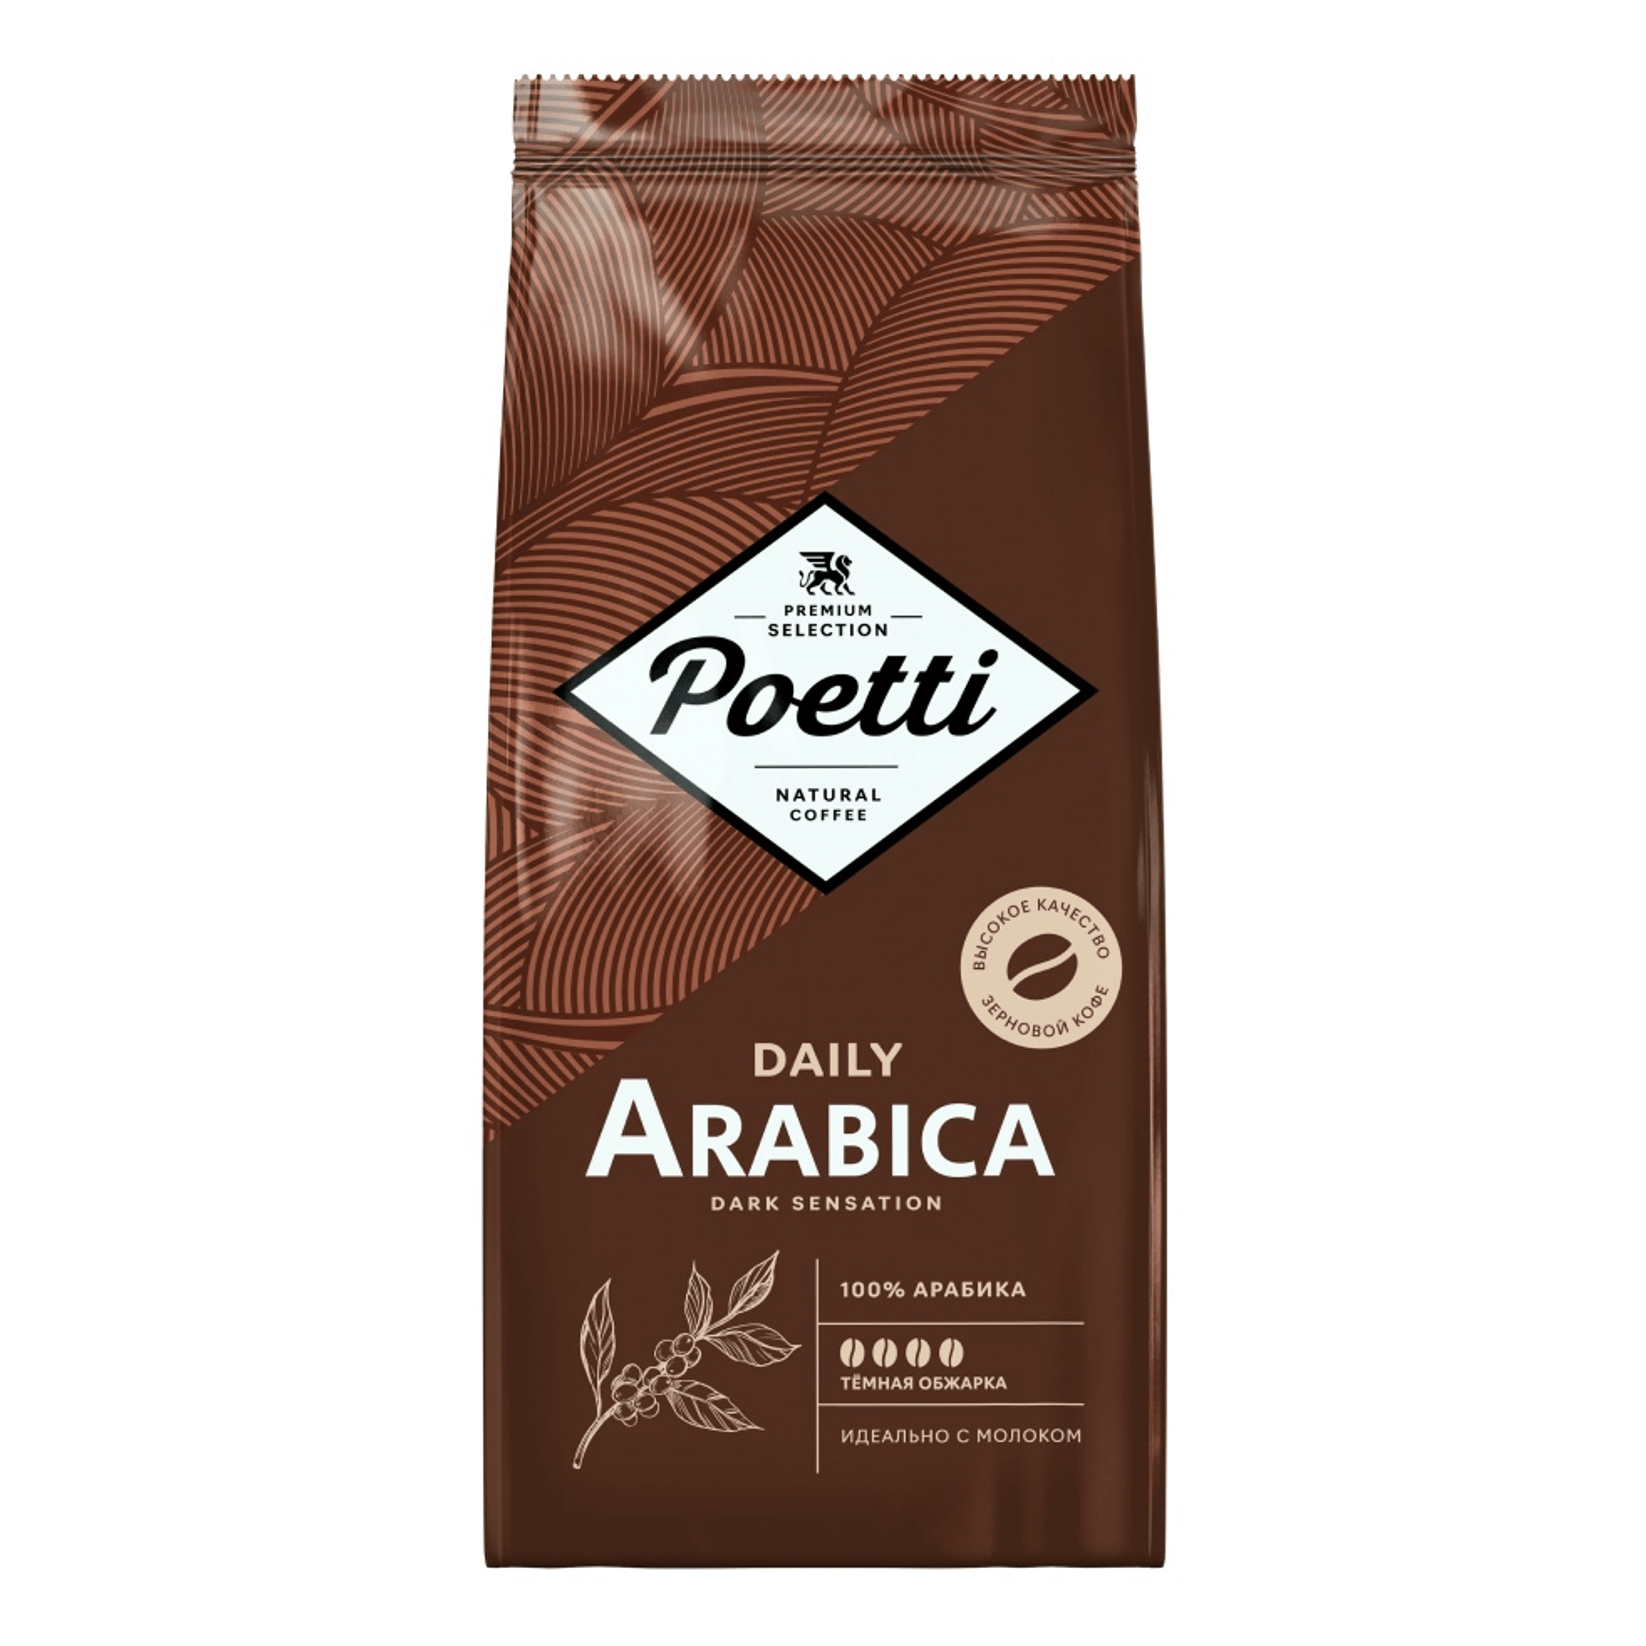 цена Кофе в зернах Poetti Daily Arabica Dark Sensation 750 г